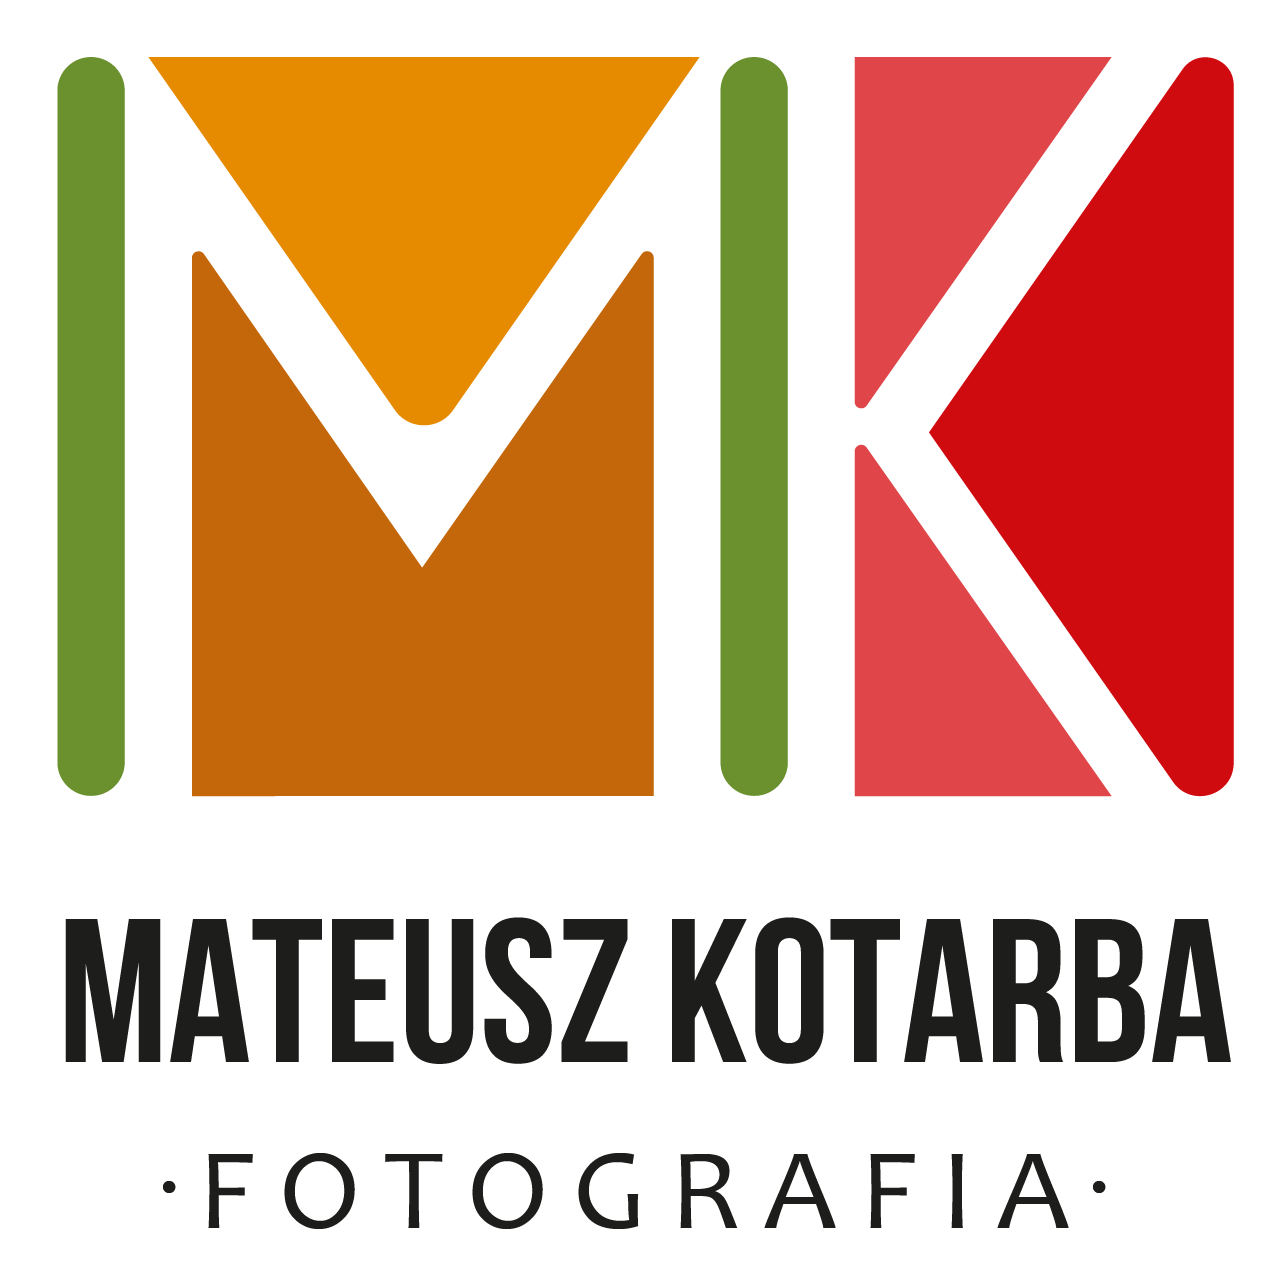 Mateusz Kotarba Fotografia